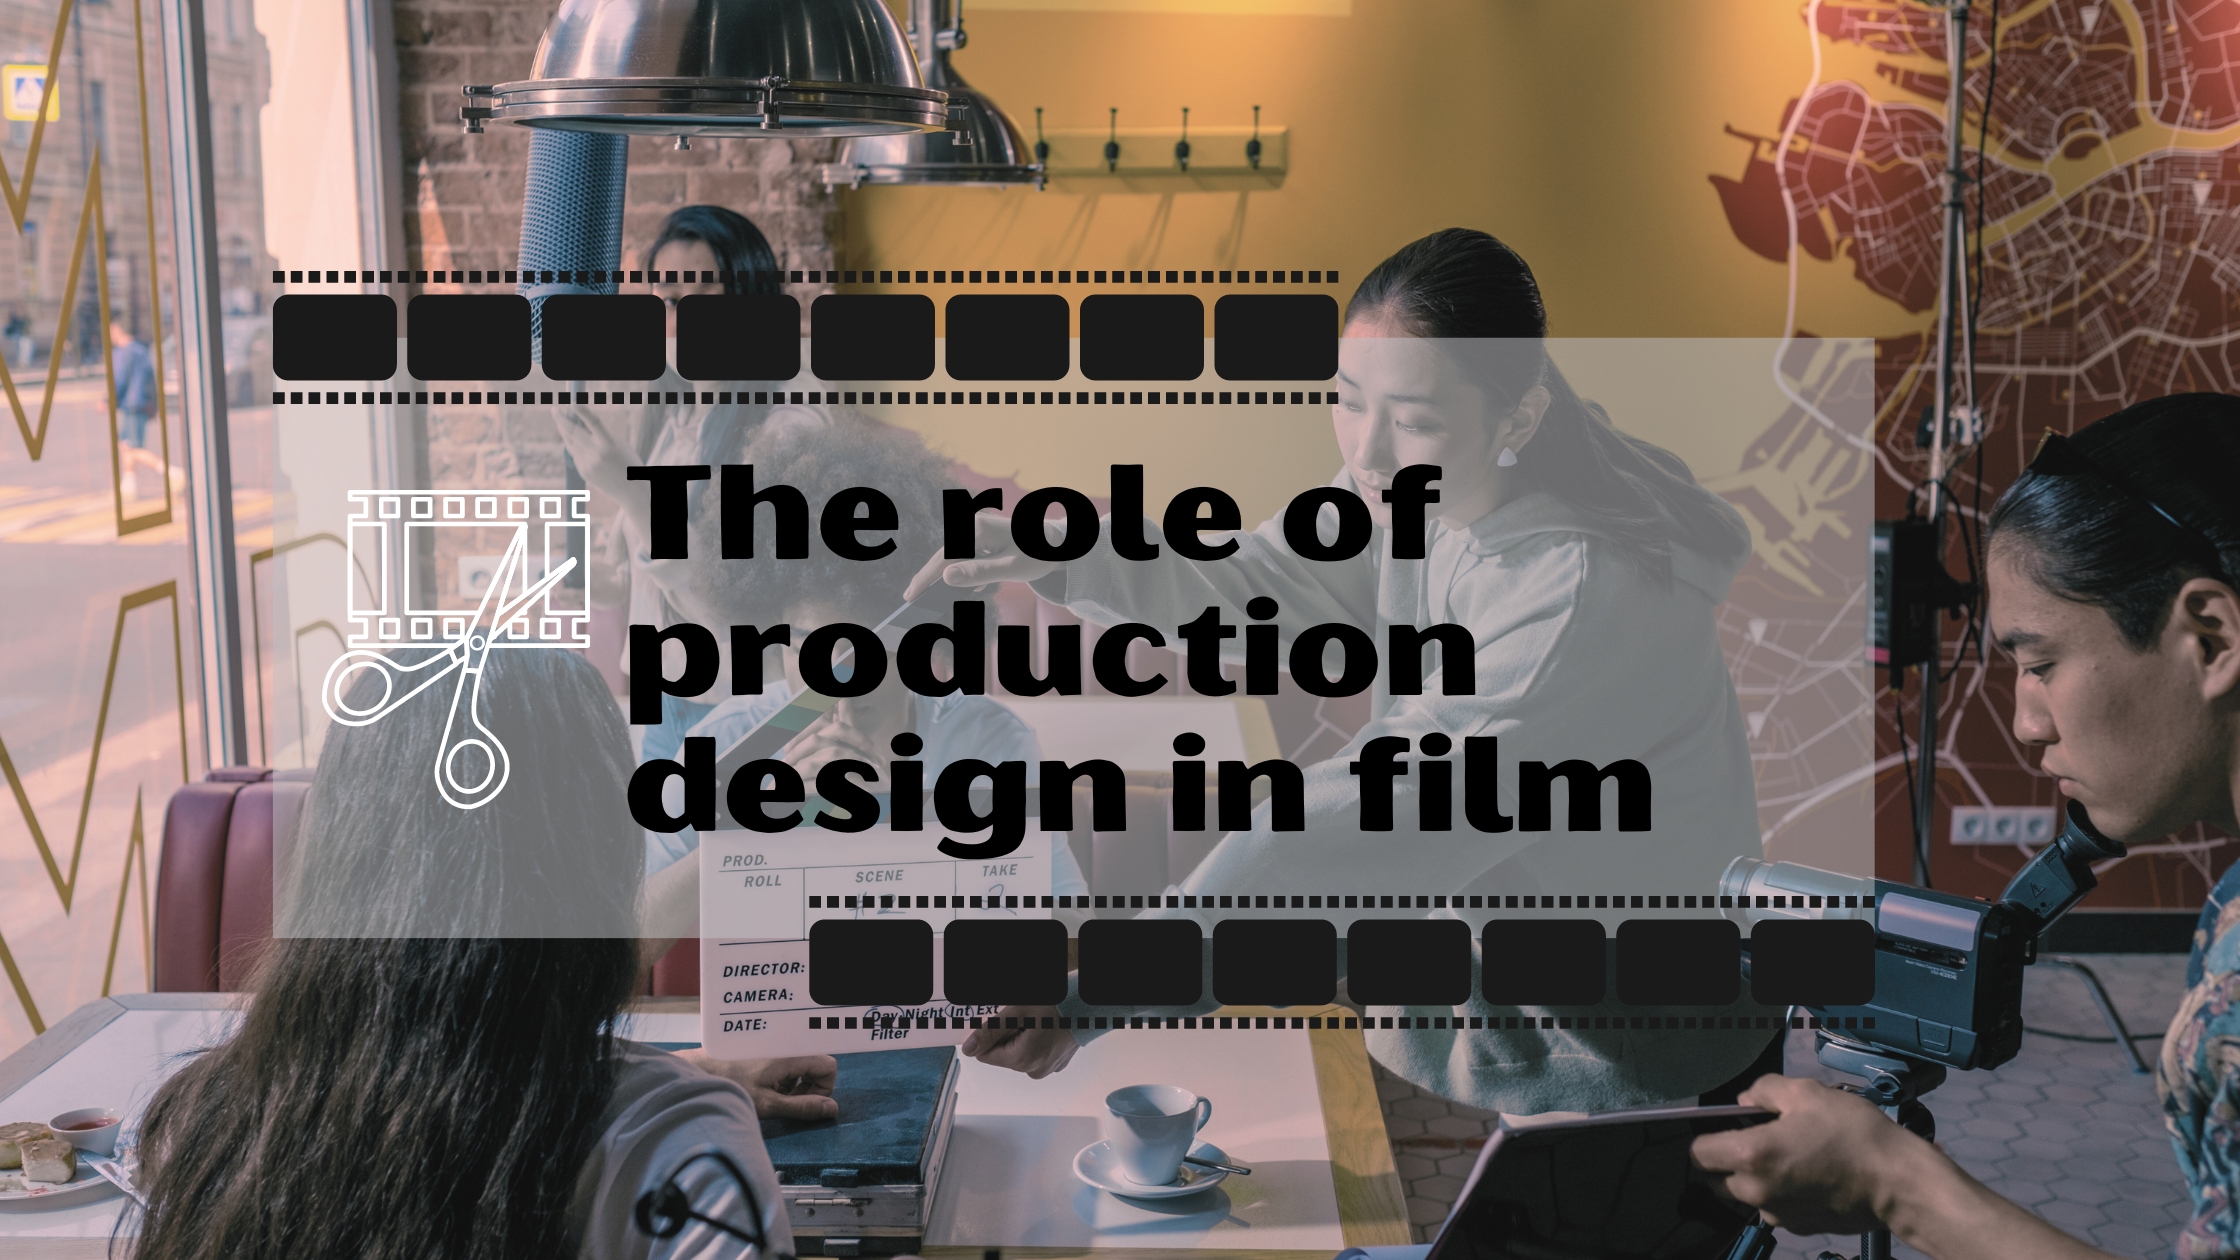 Blog header for the importance of film production design.